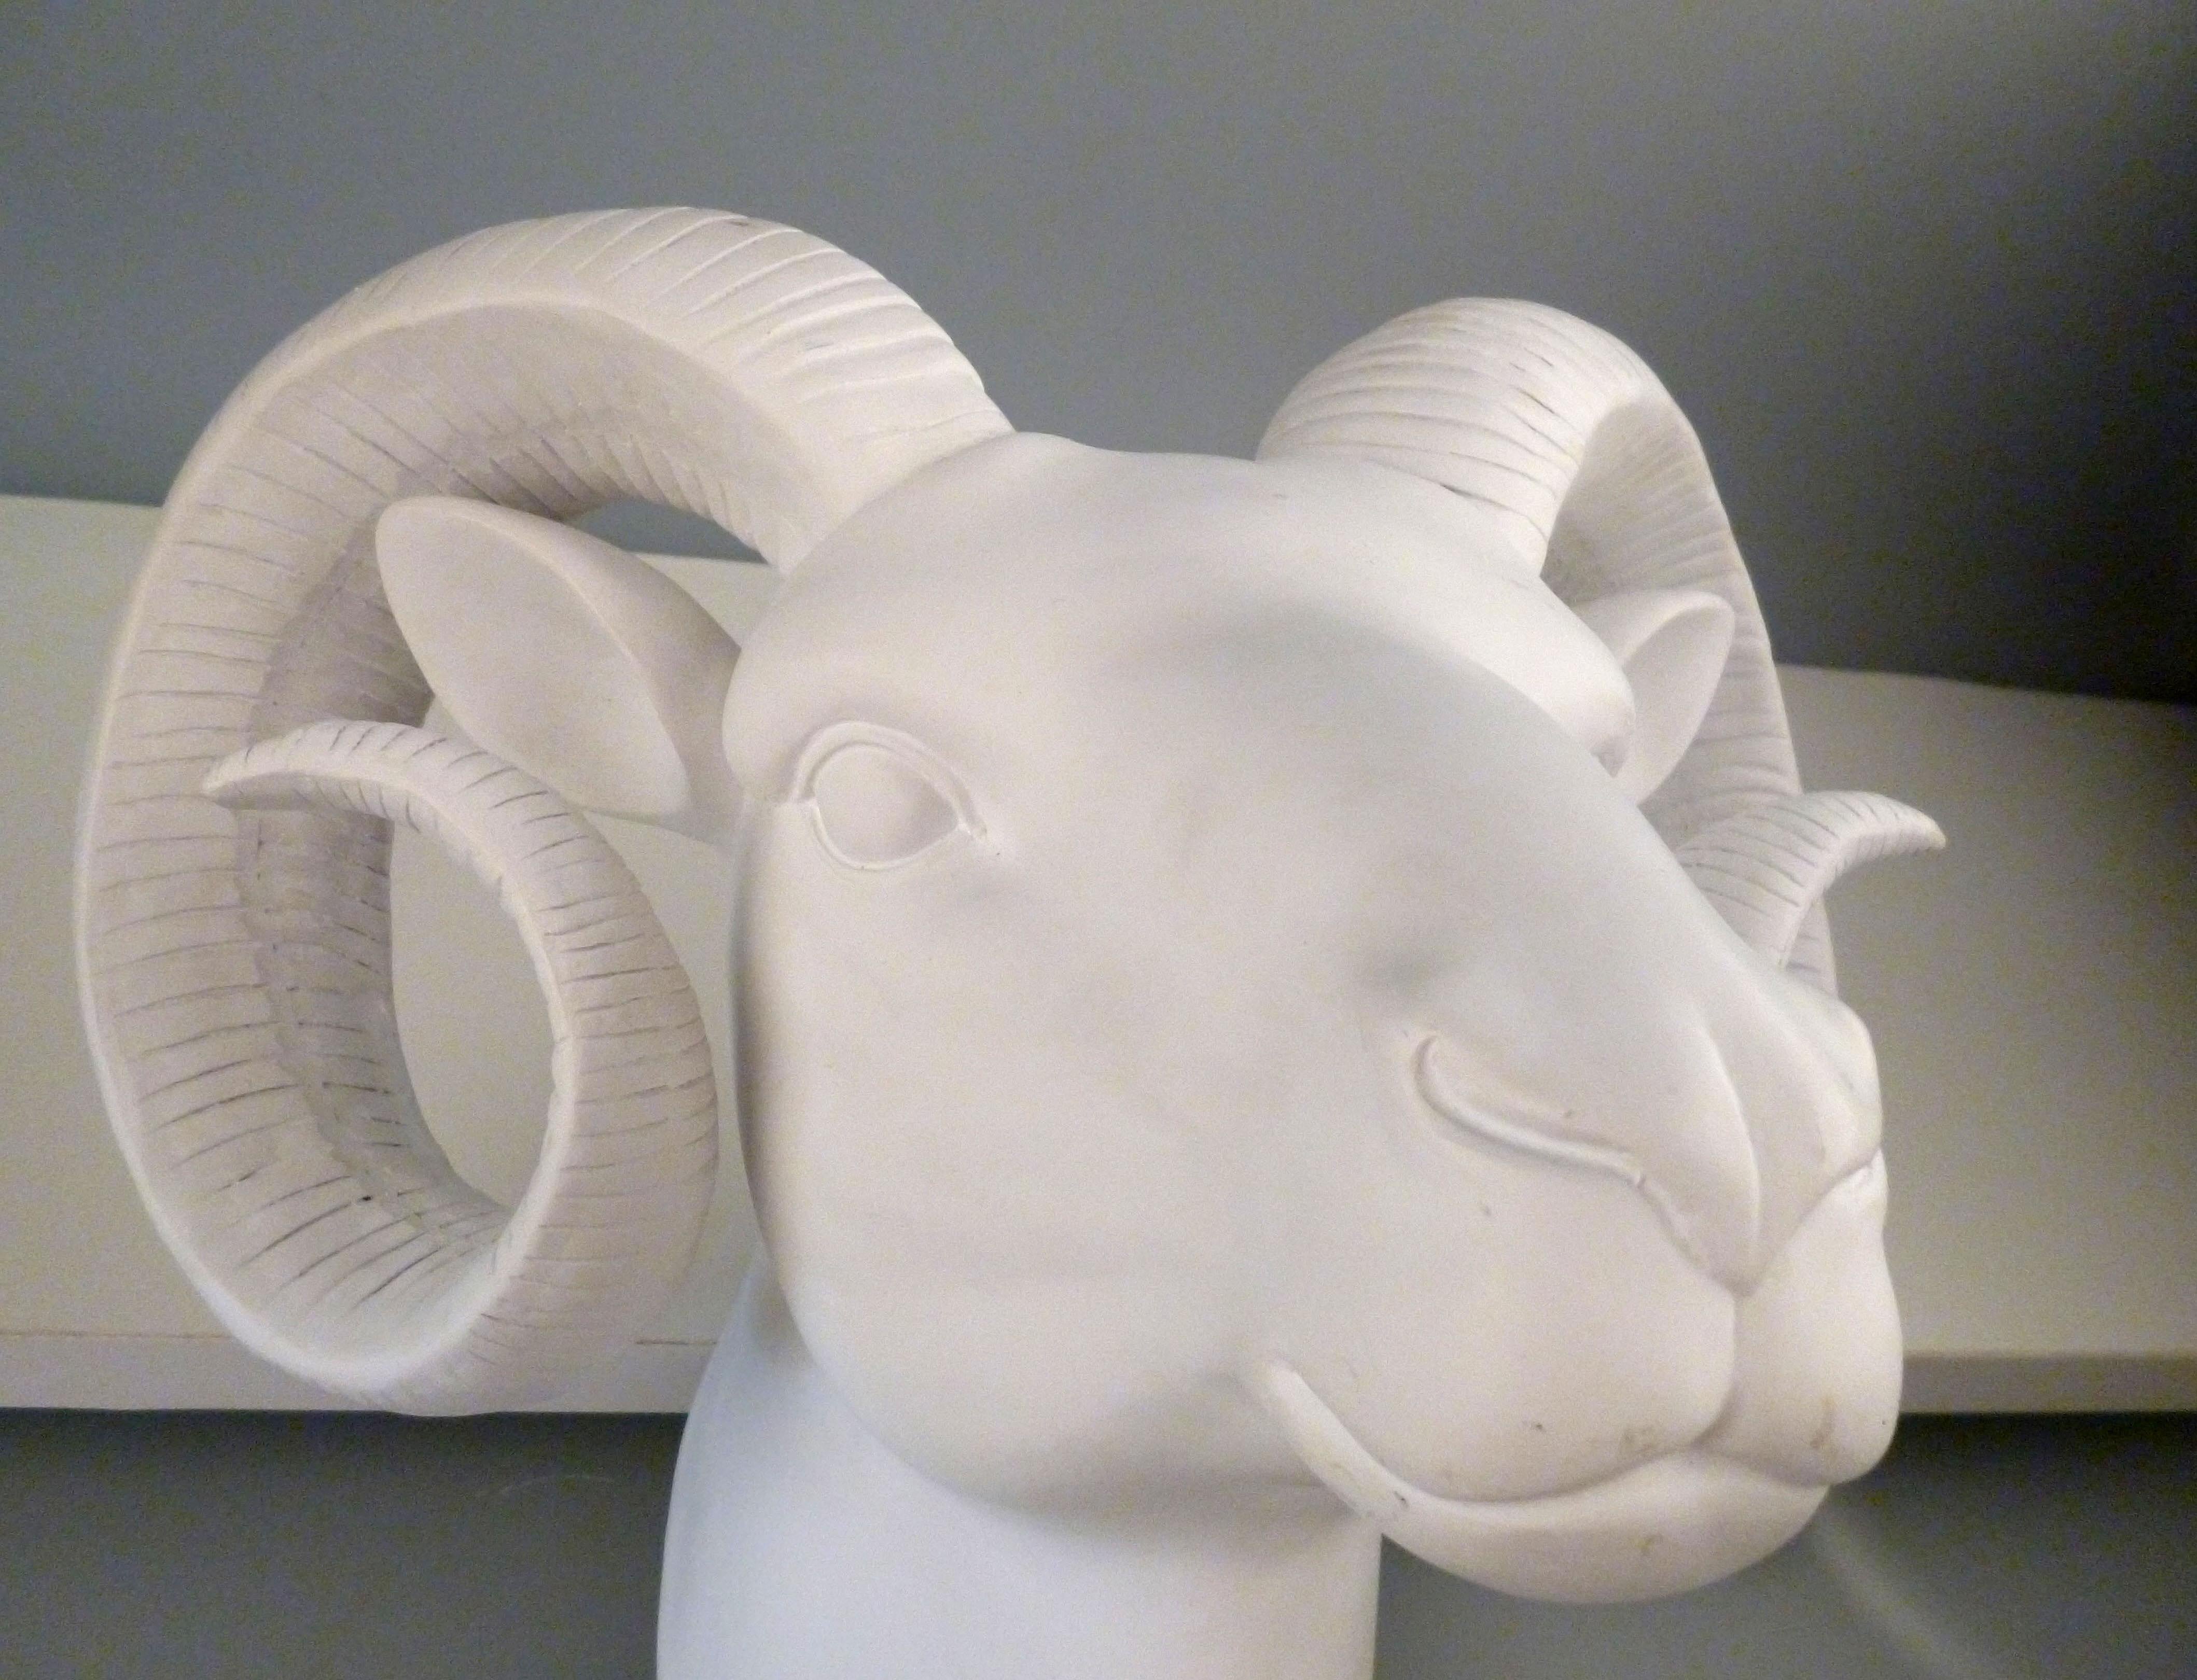 American Hollywood Regency White Plaster Ram's Head Sculpture, Wall Art